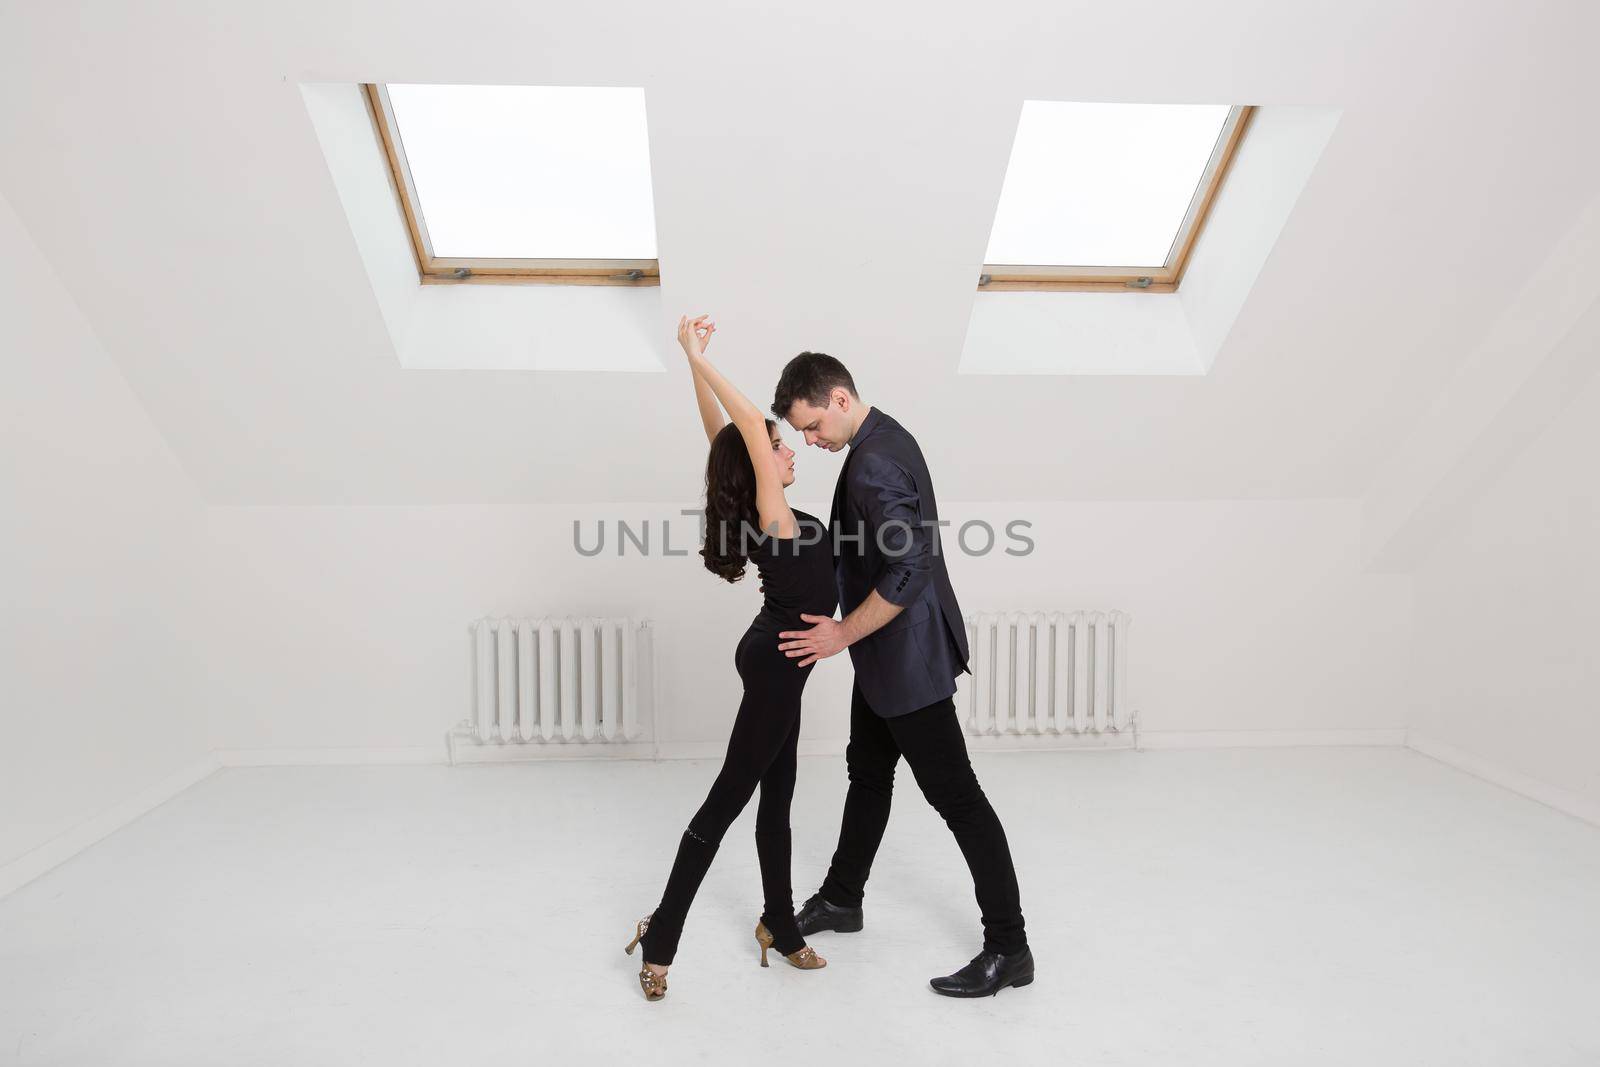 beautiful couple dancing bachata on white background in studio